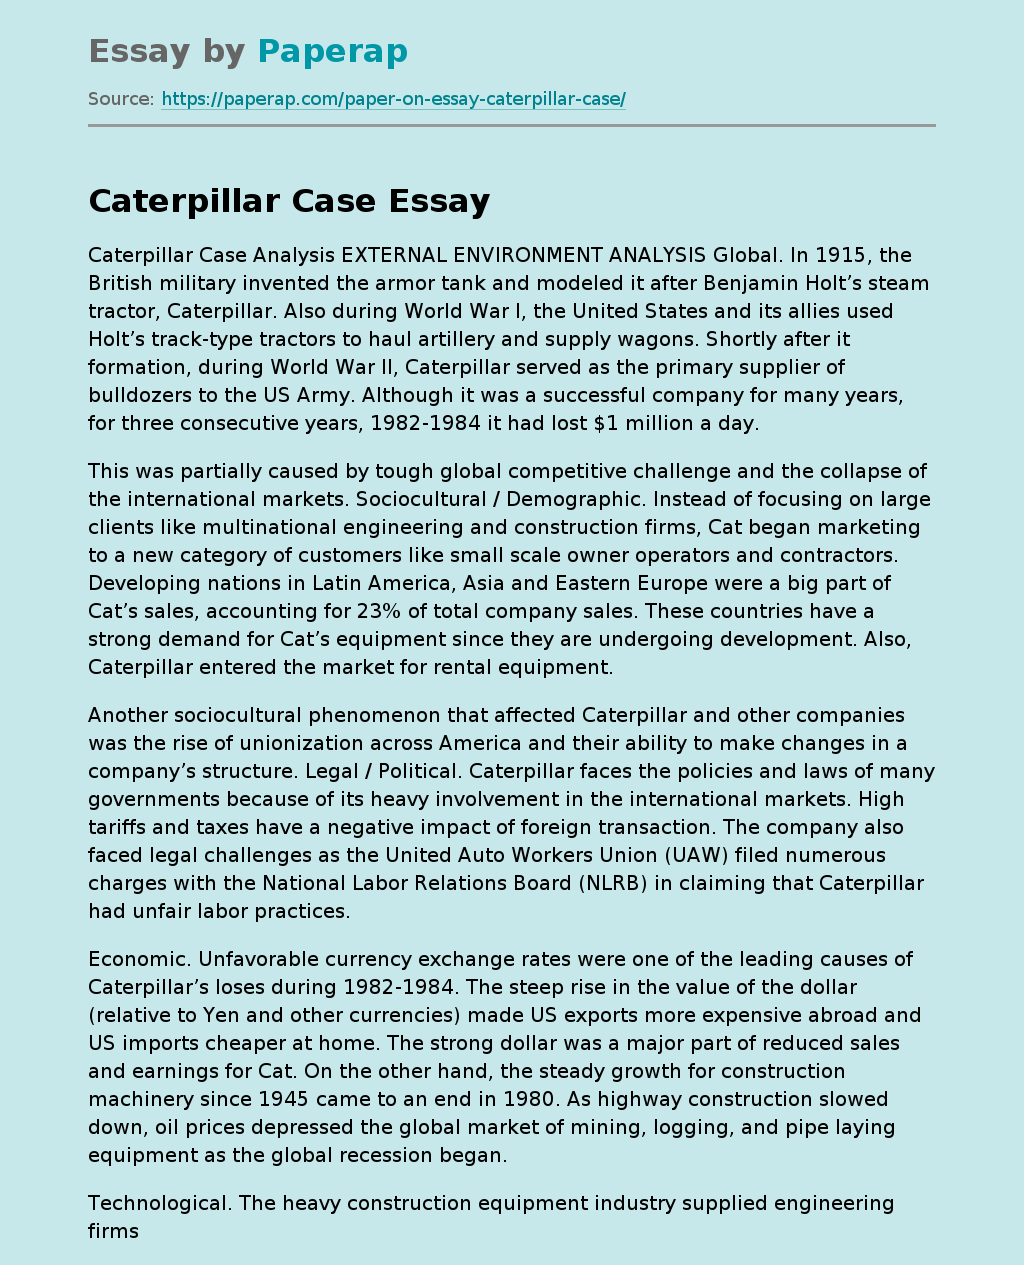 Caterpillar Case